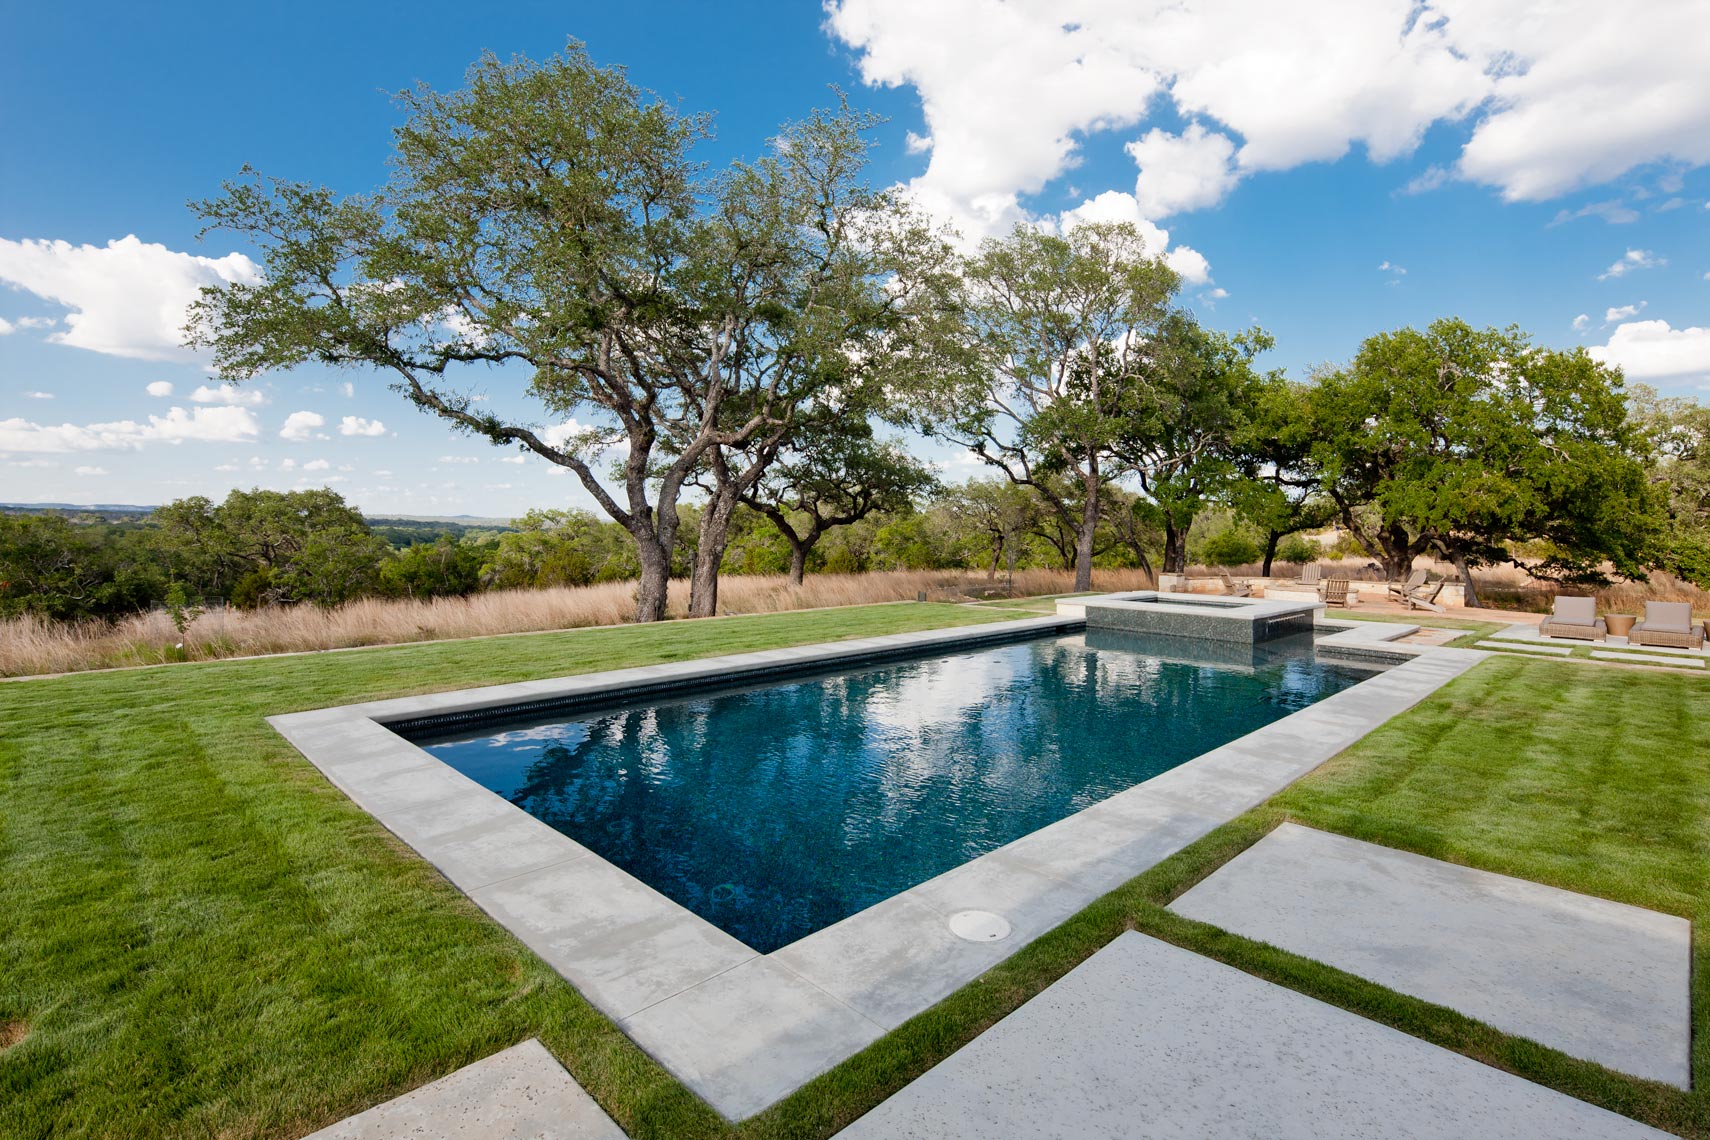 Pool in San Antonio Texas shot for Dynamic Environments/John Hackett.